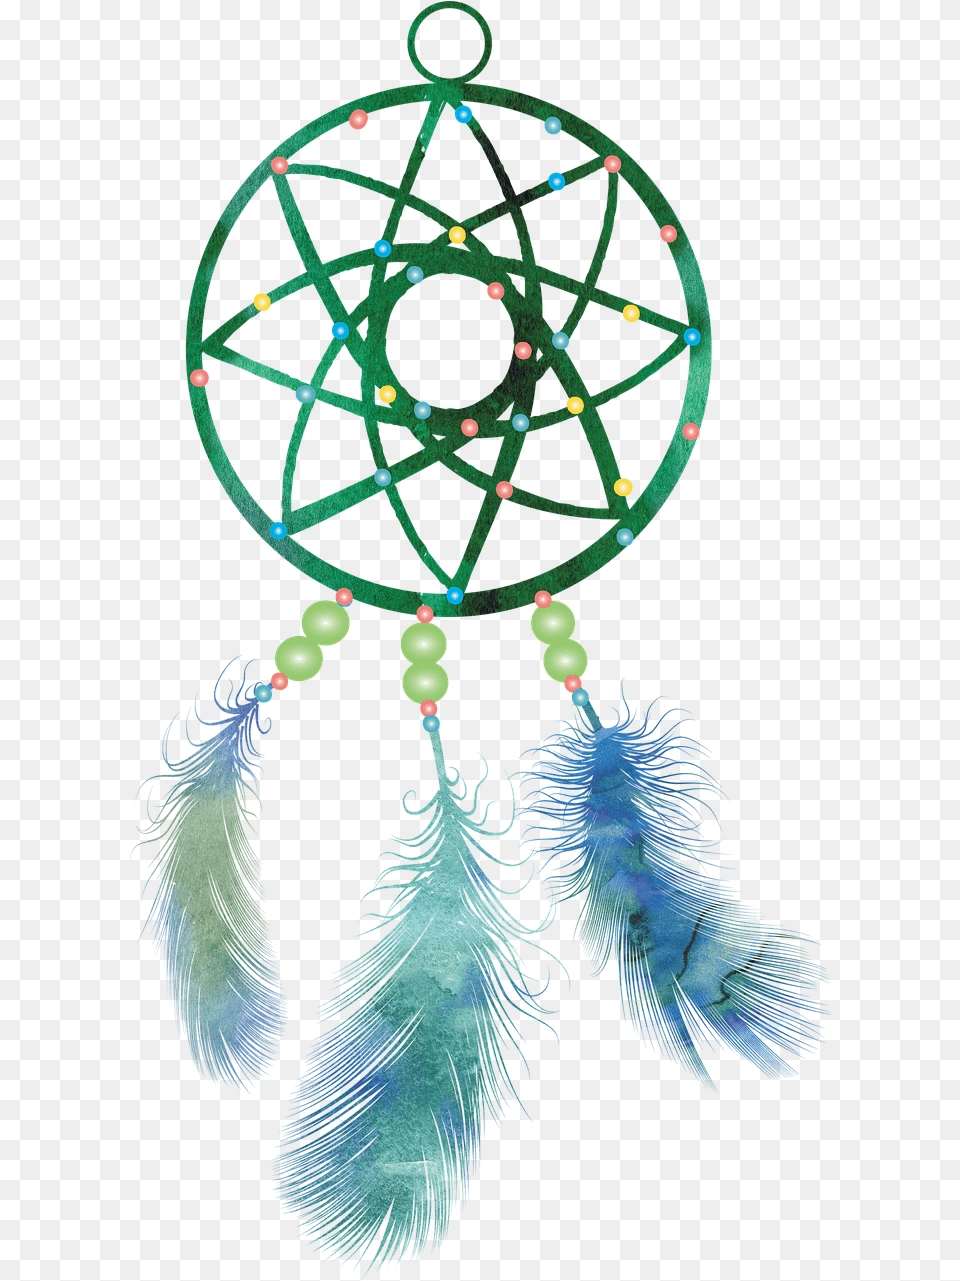 Dreamcatcher Watercolor Feathers Image On Pixabay Dessin Attrape Reve Facile, Accessories, Plant, Ornament Png